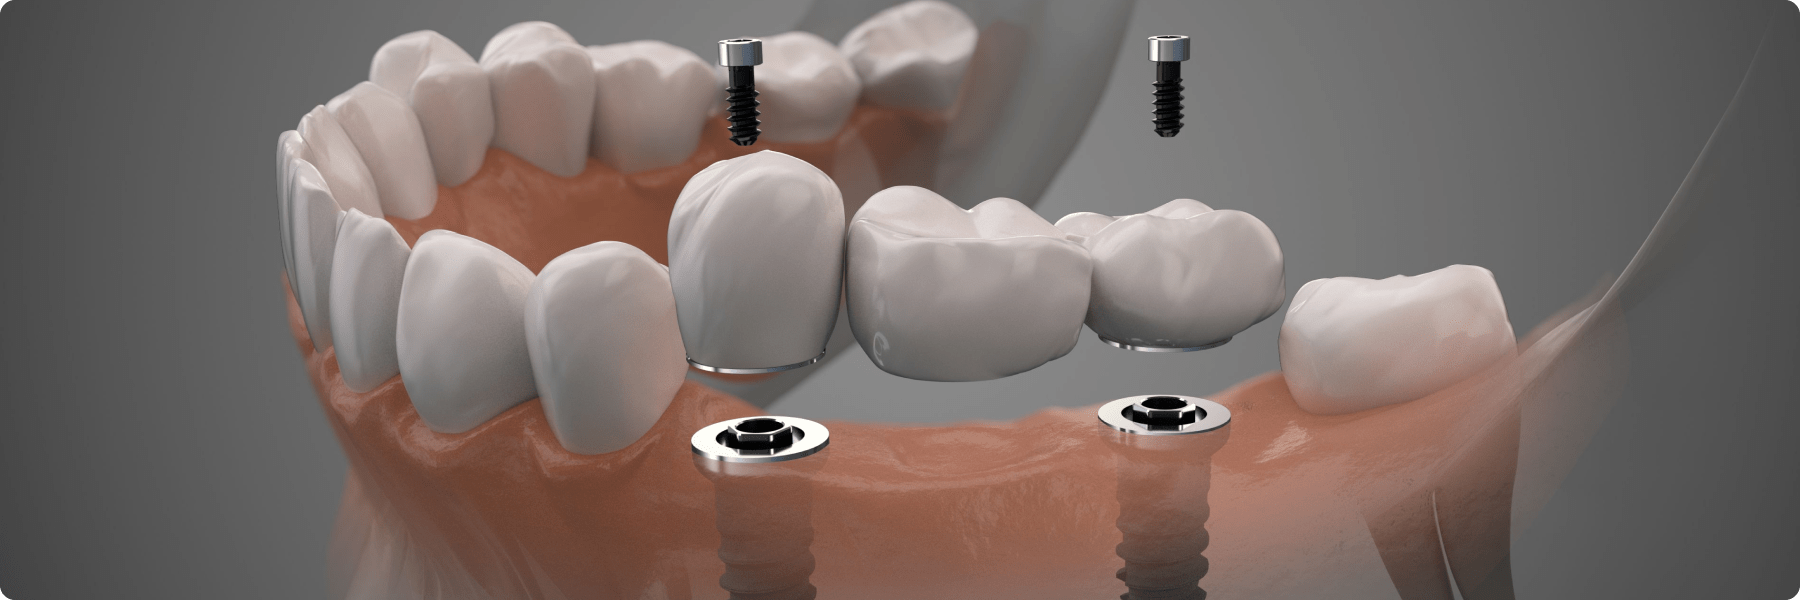 Dentiste Dr David Steuer implantologie Paris chirurgie dentaire